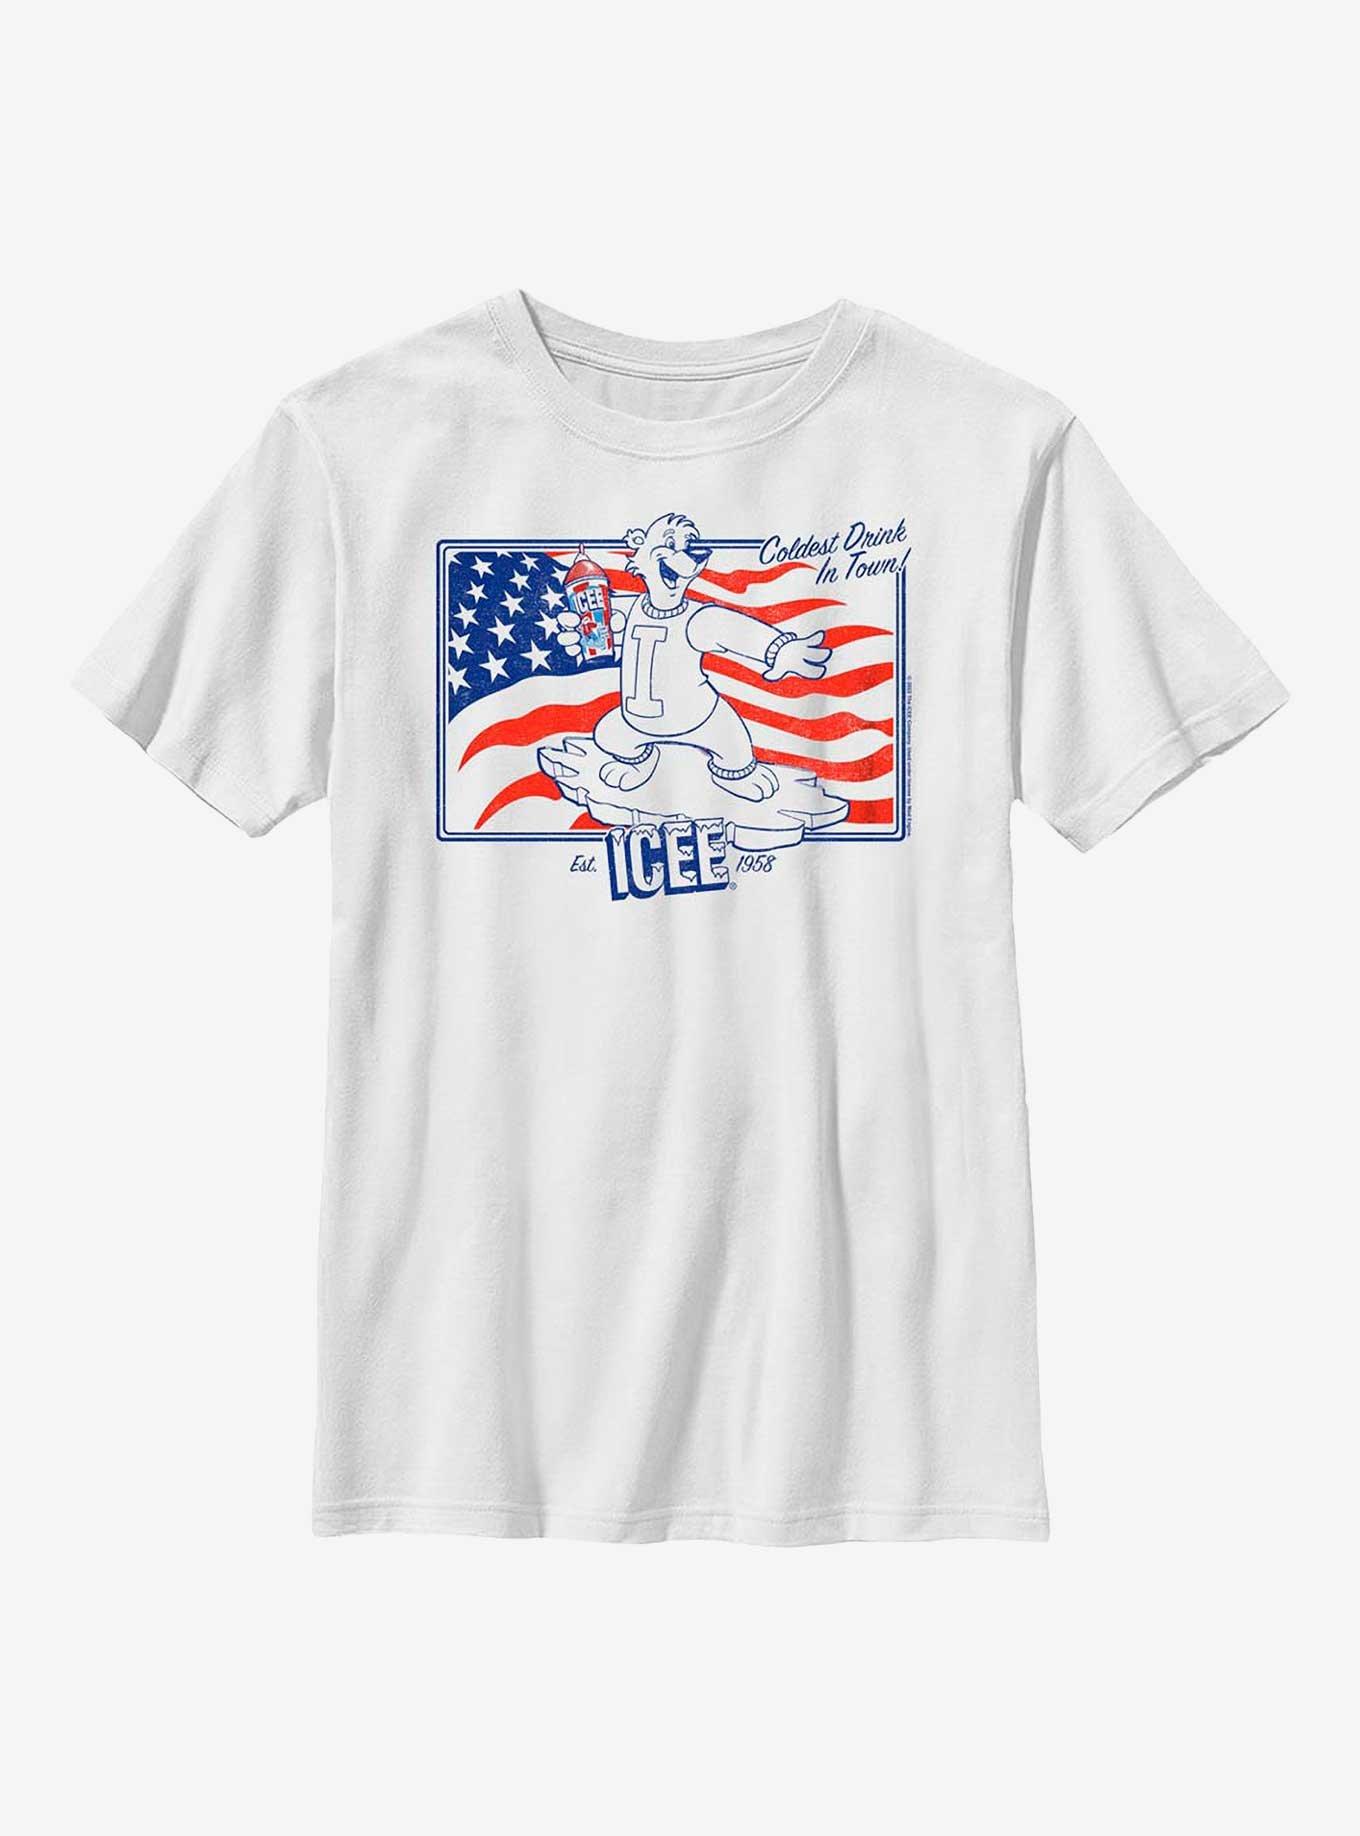 Icee Americana Line Art Youth T-Shirt, WHITE, hi-res